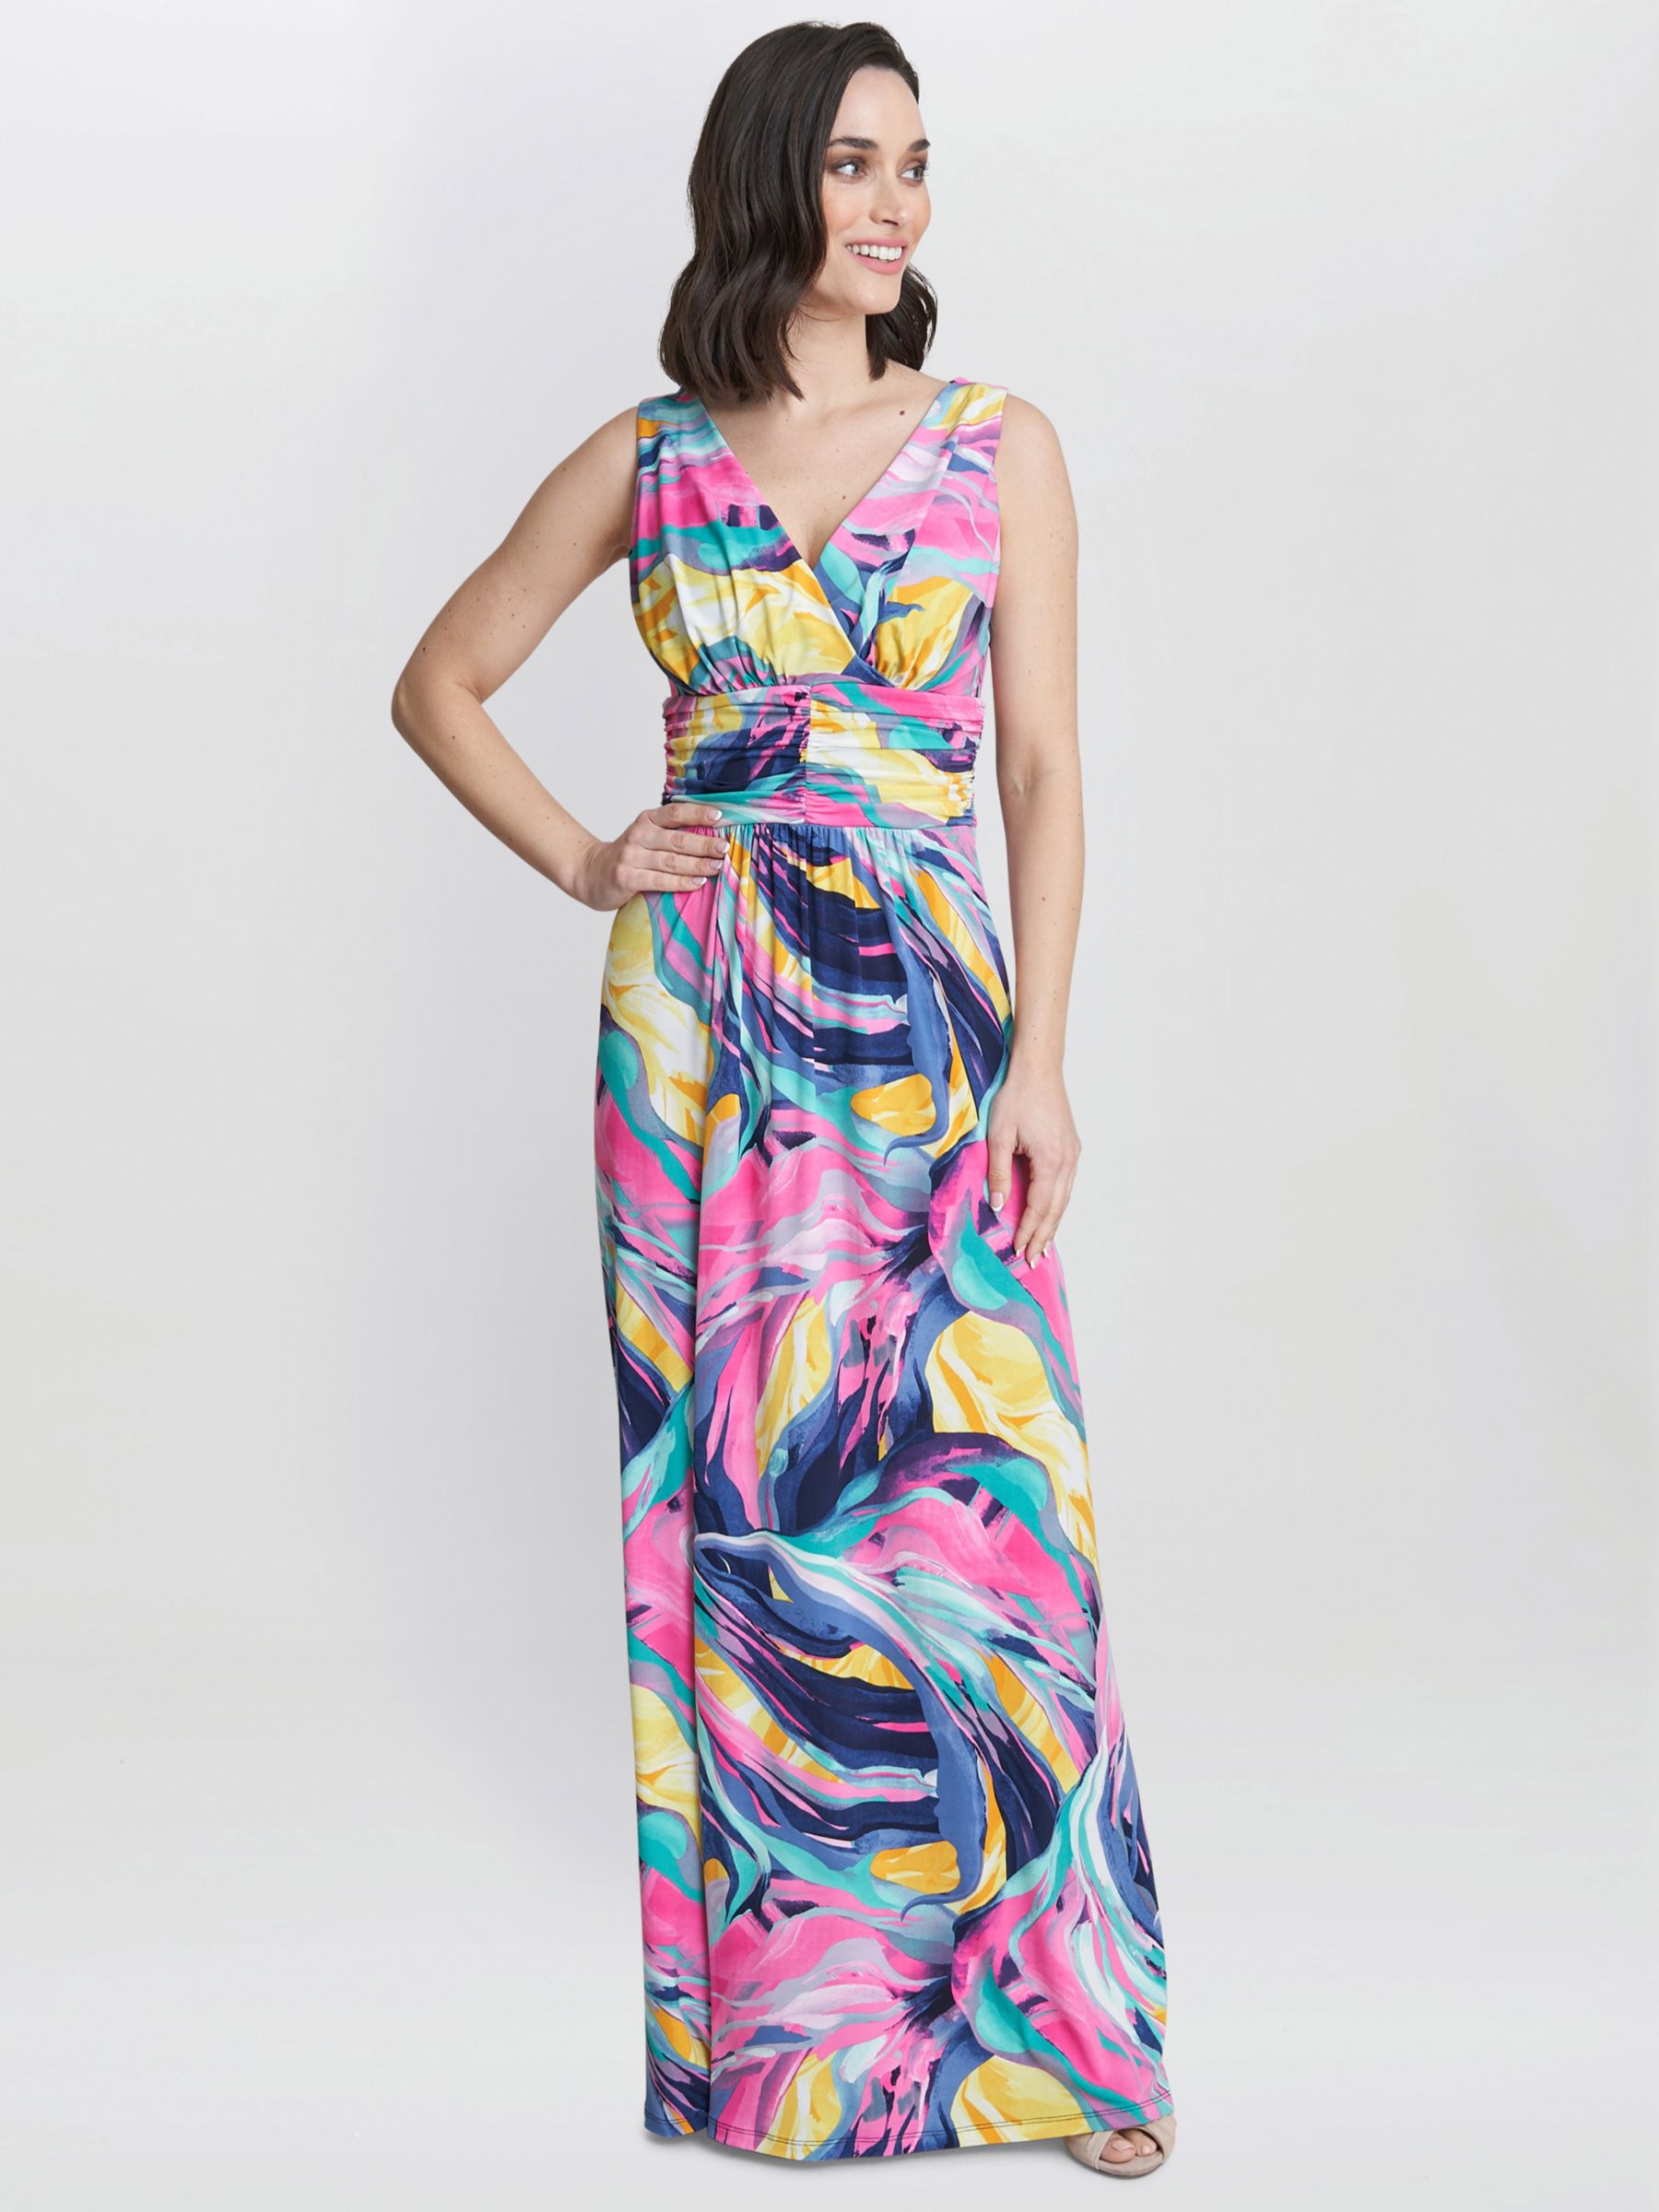 Gina Bacconi Camille Abstract Print Jersey Maxi Dress, Peach/Multi, 8